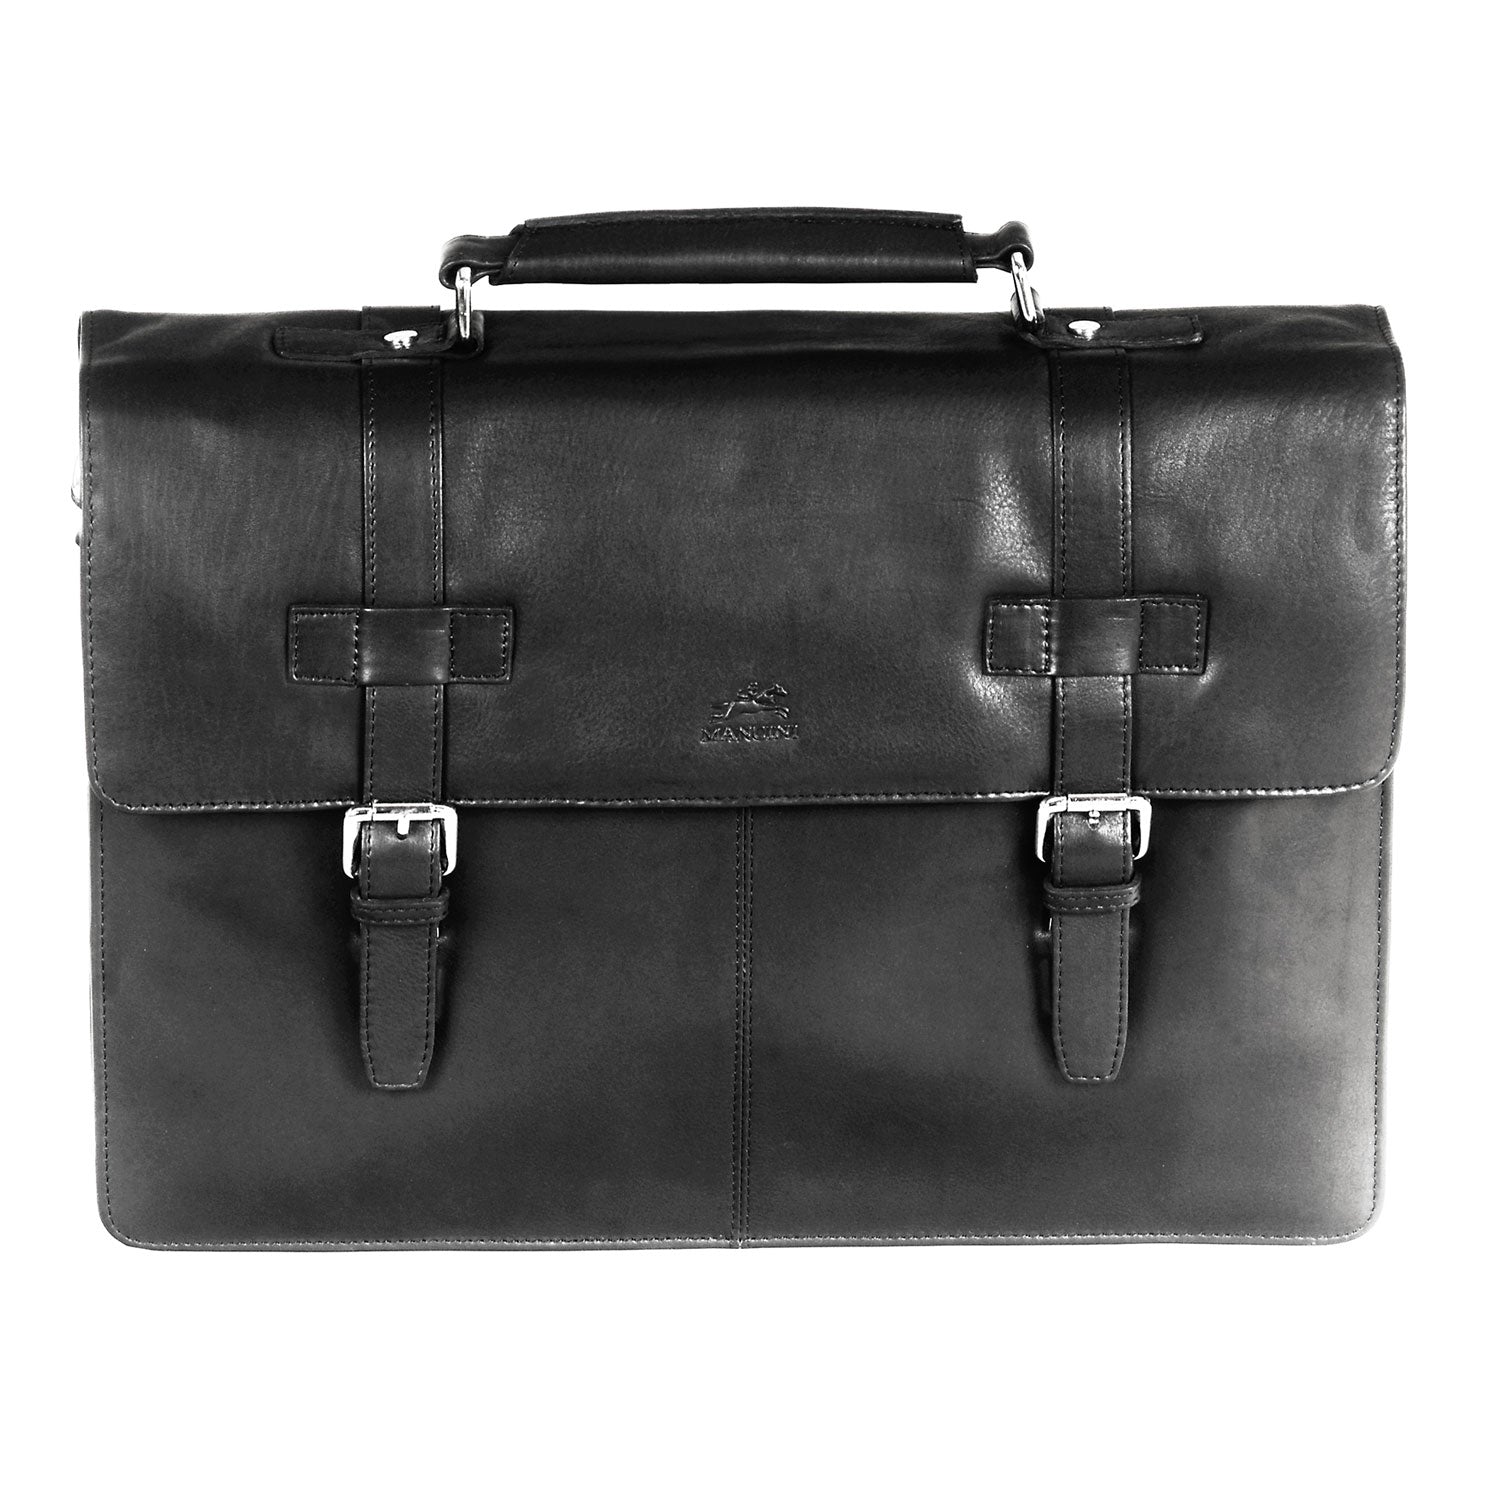 Mancini Leather Double Compartment Flap Briefcase for 15.6" Laptop / Tablet, 16" x 4" x 12", Black